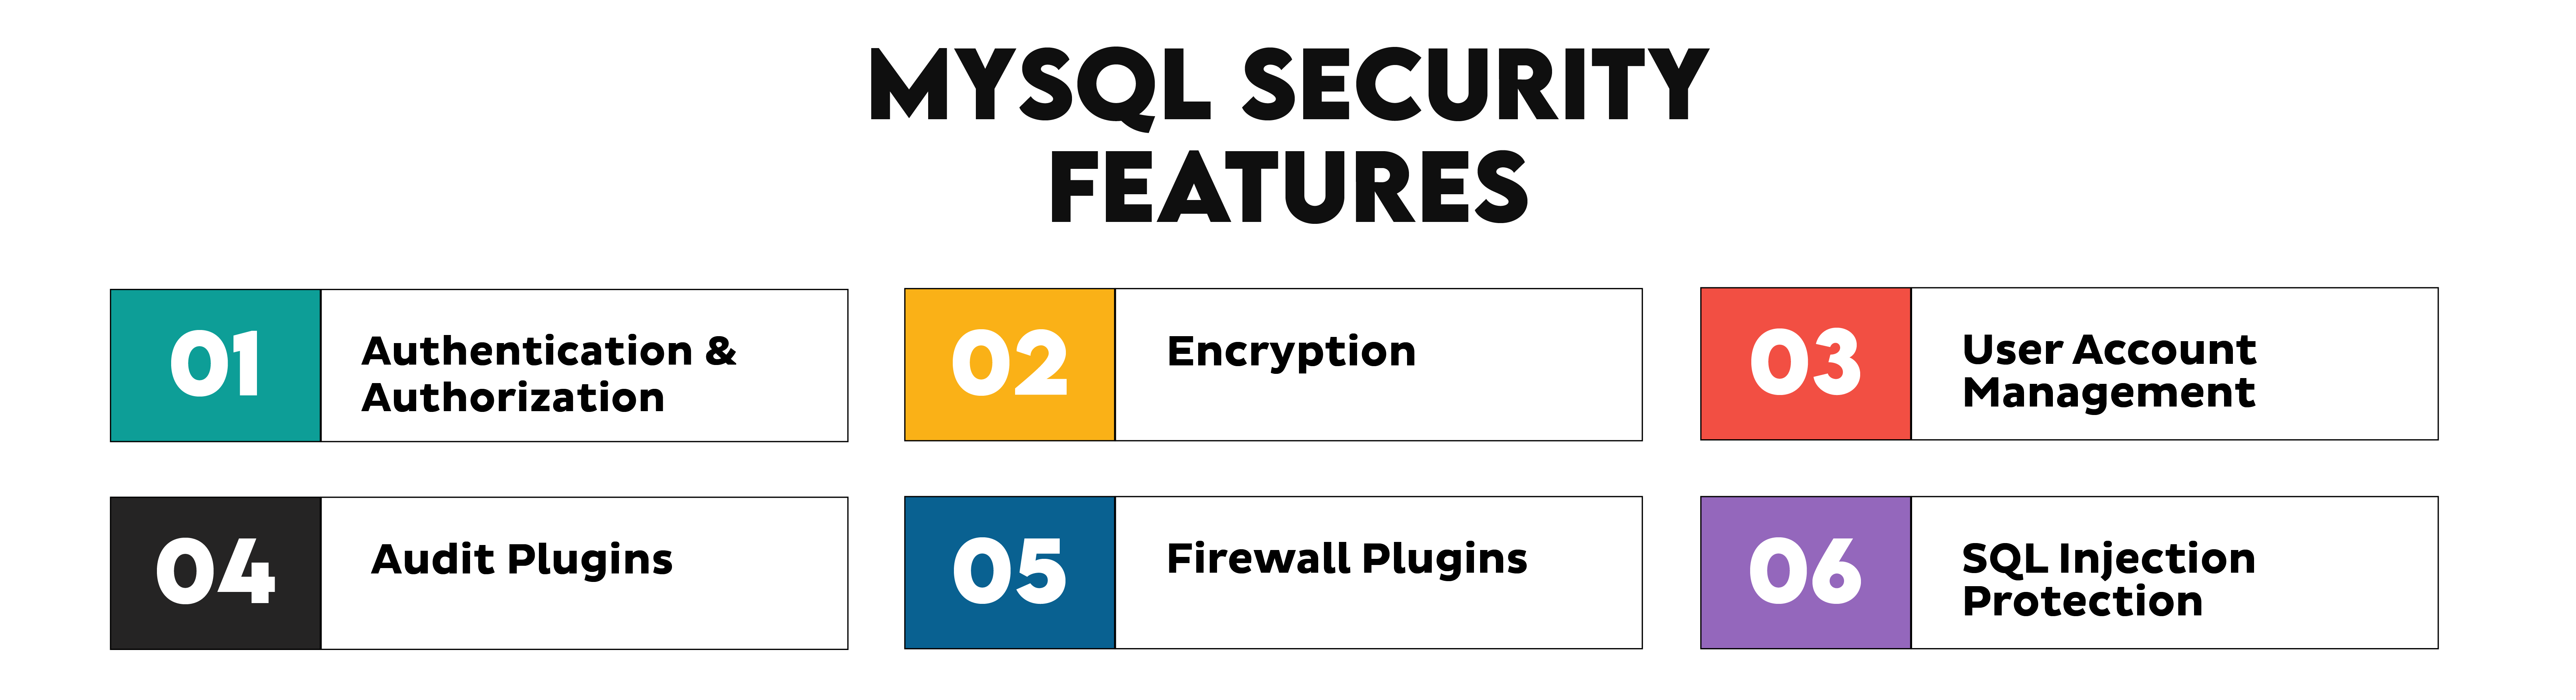 MySQL vs MS SQL Security Features